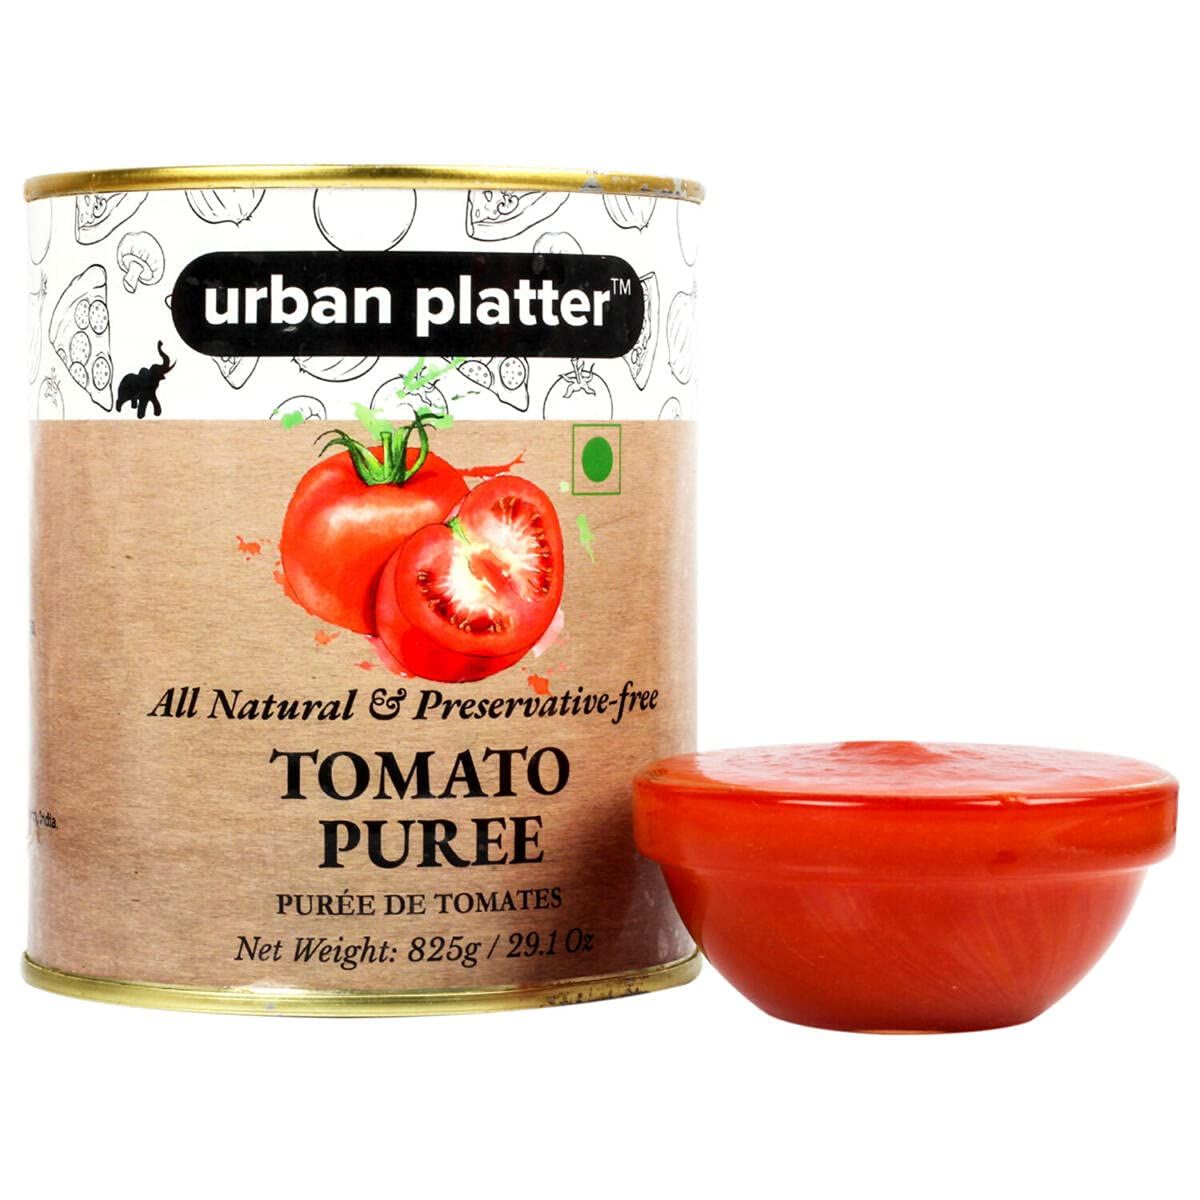 Urban Platter Tomato Puree Image